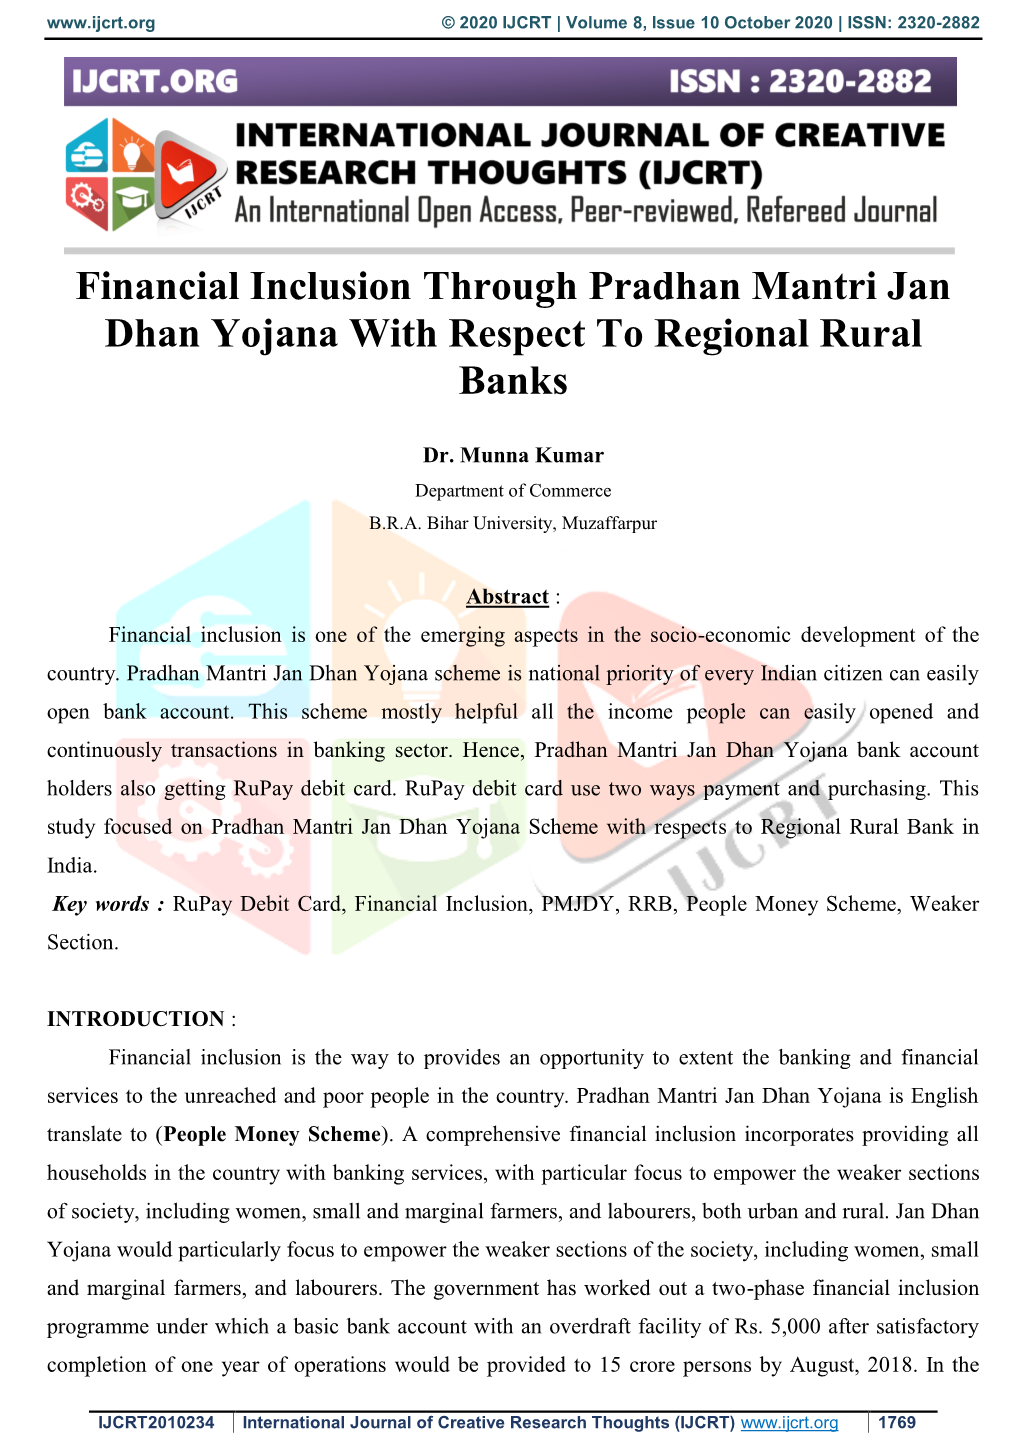 Financial Inclusion Through Pradhan Mantri Jan Dhan Yojana with Respect to Regional Rural Banks